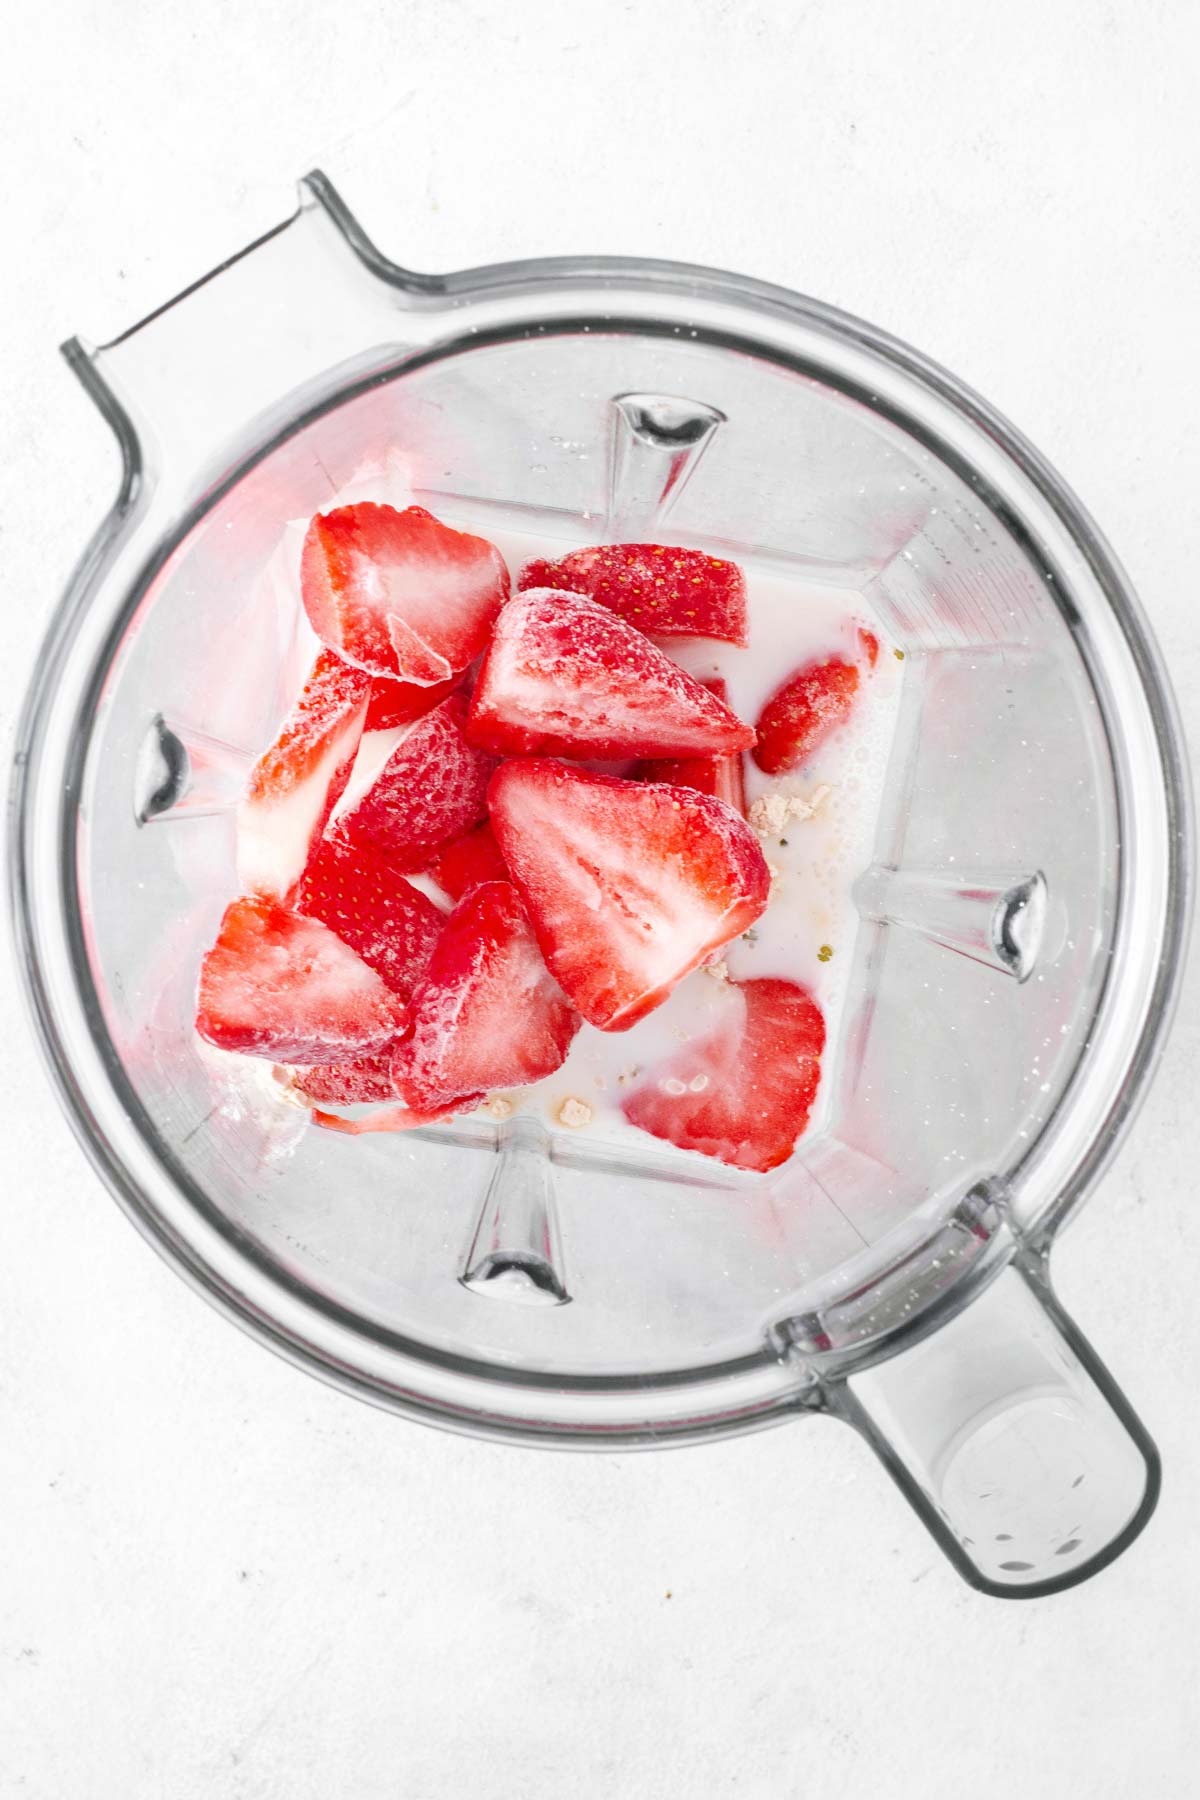 Strawberry protein smoothie ingredients in a blender.